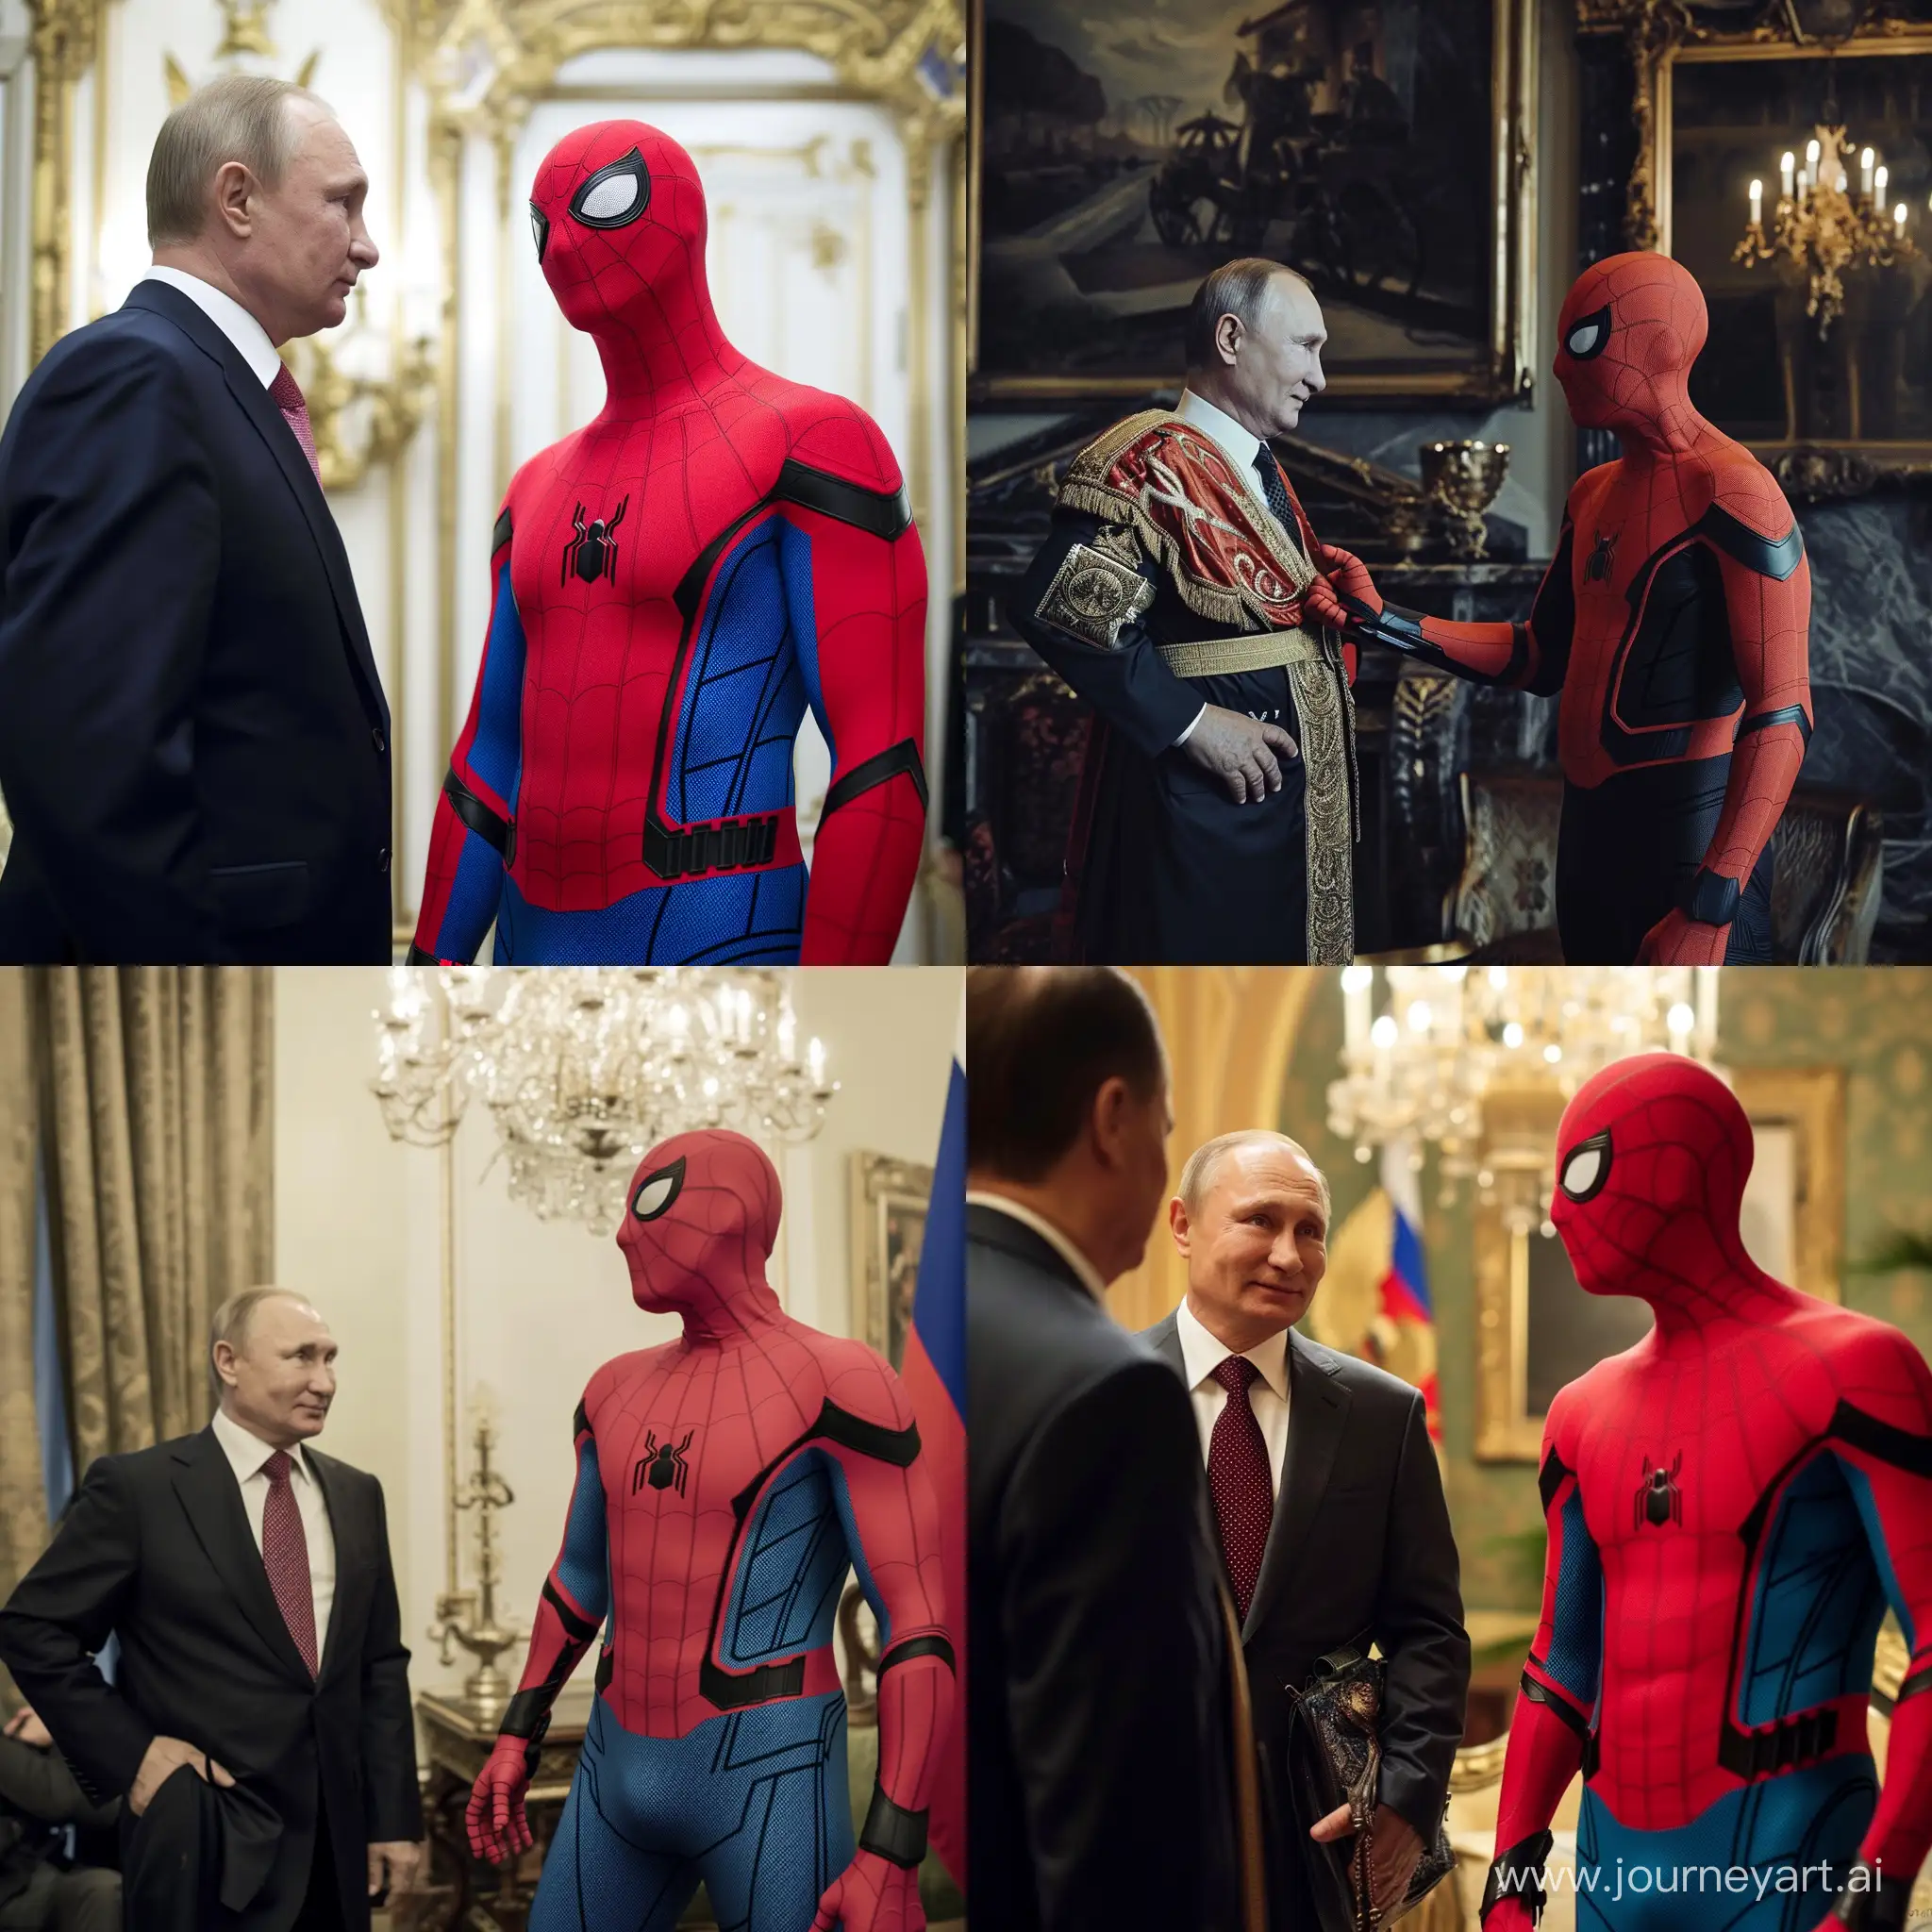 Putins-Encounter-with-SpiderMan-at-the-Kremlin